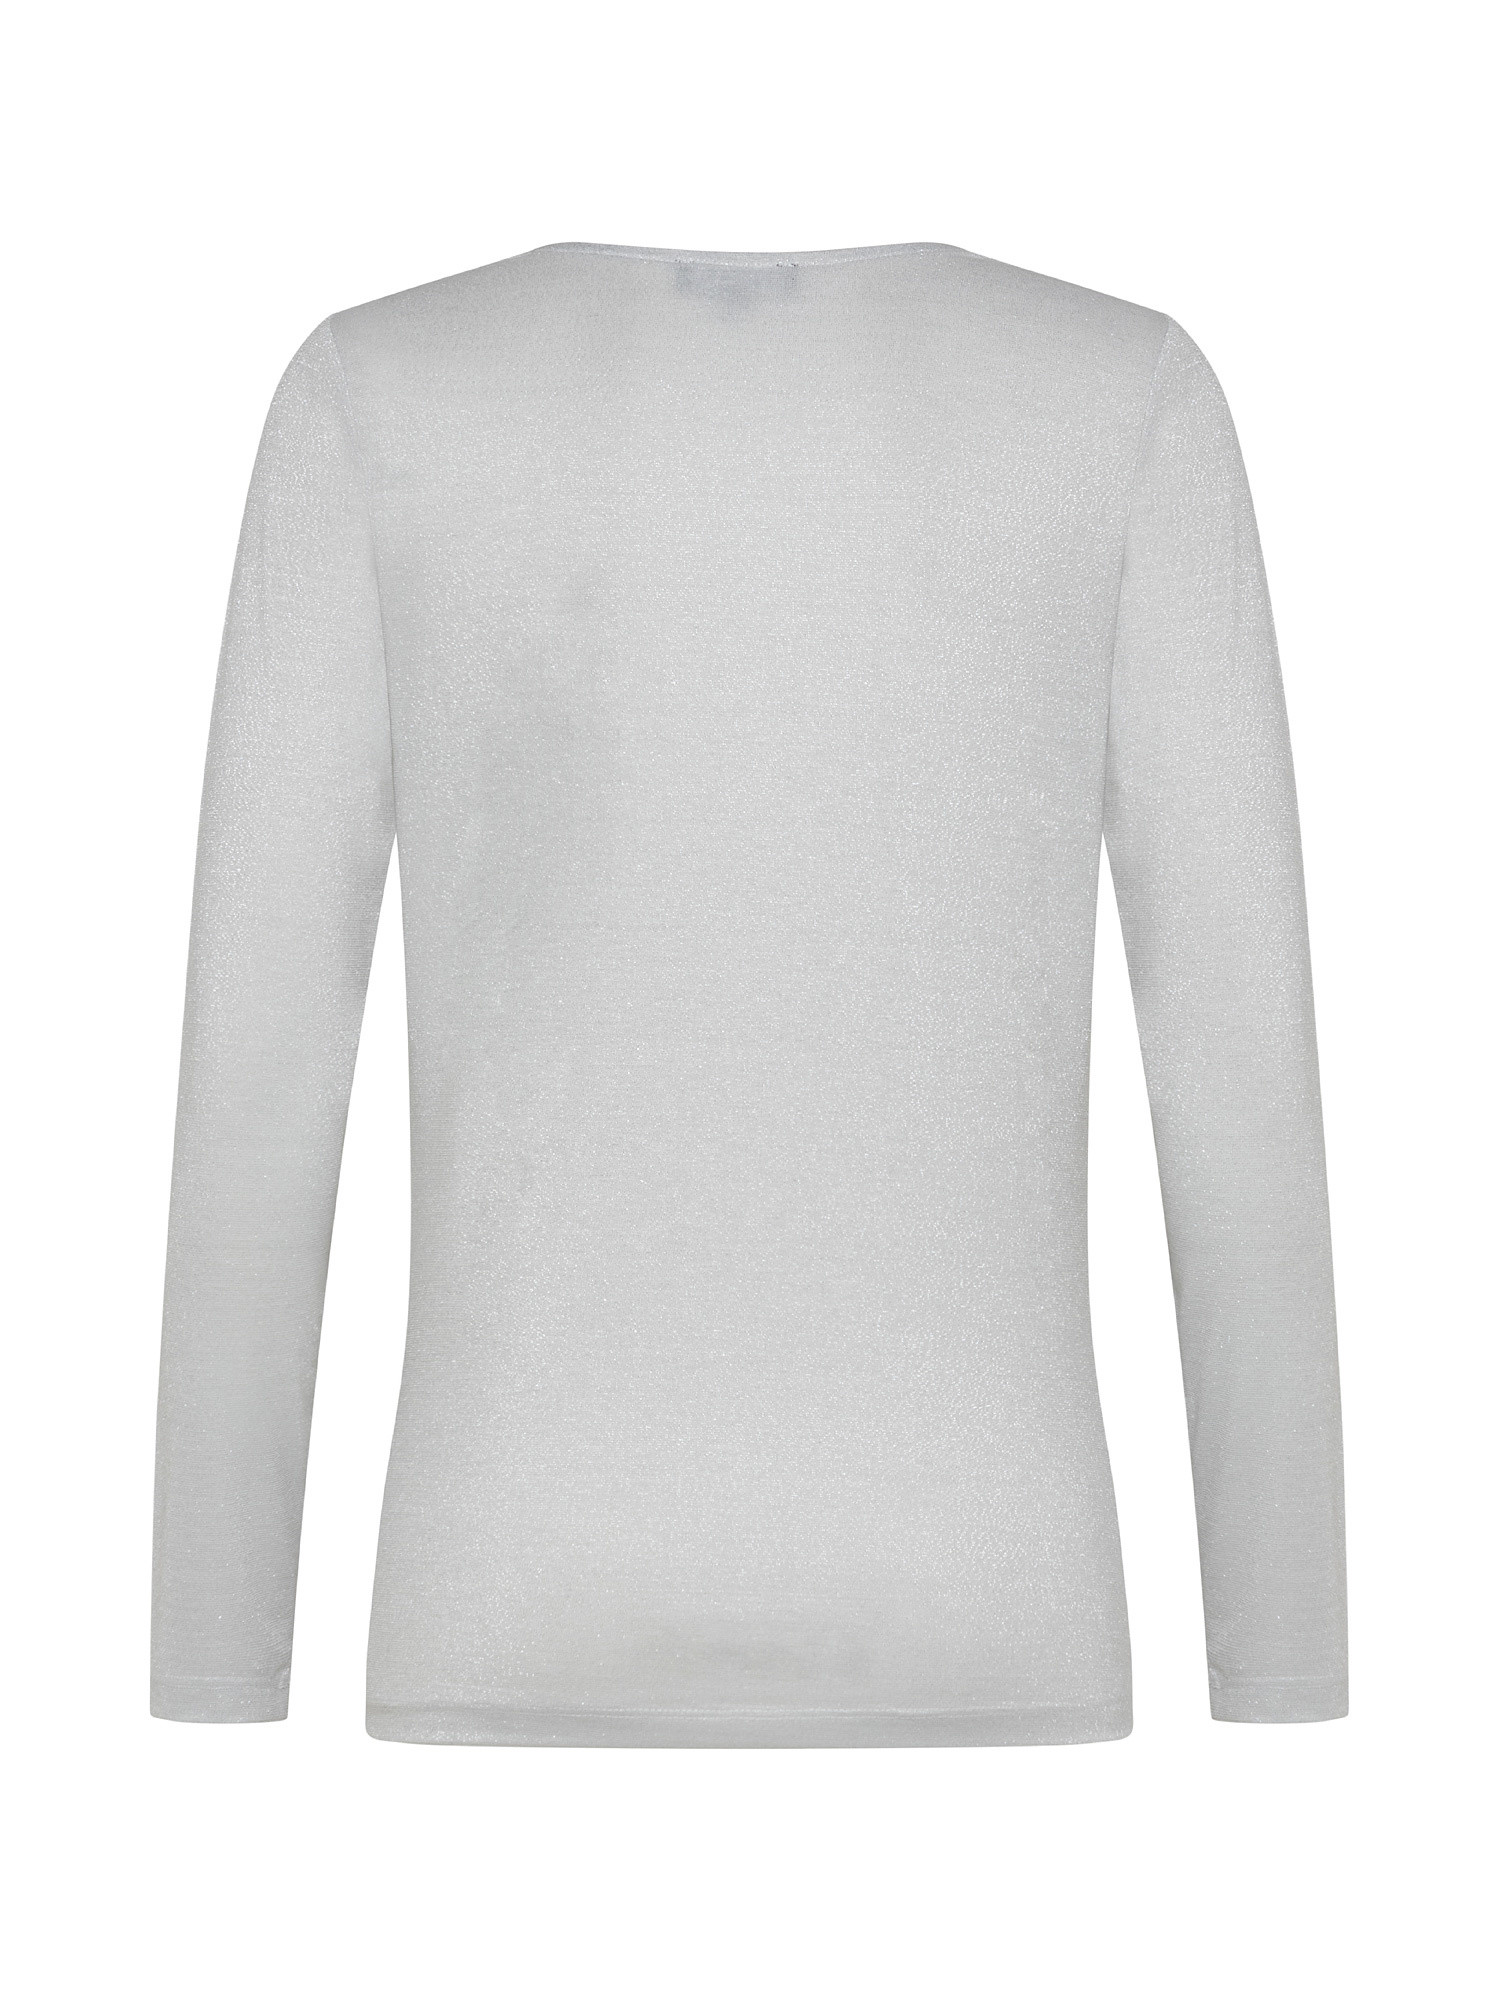 T-shirt con collo, Bianco, large